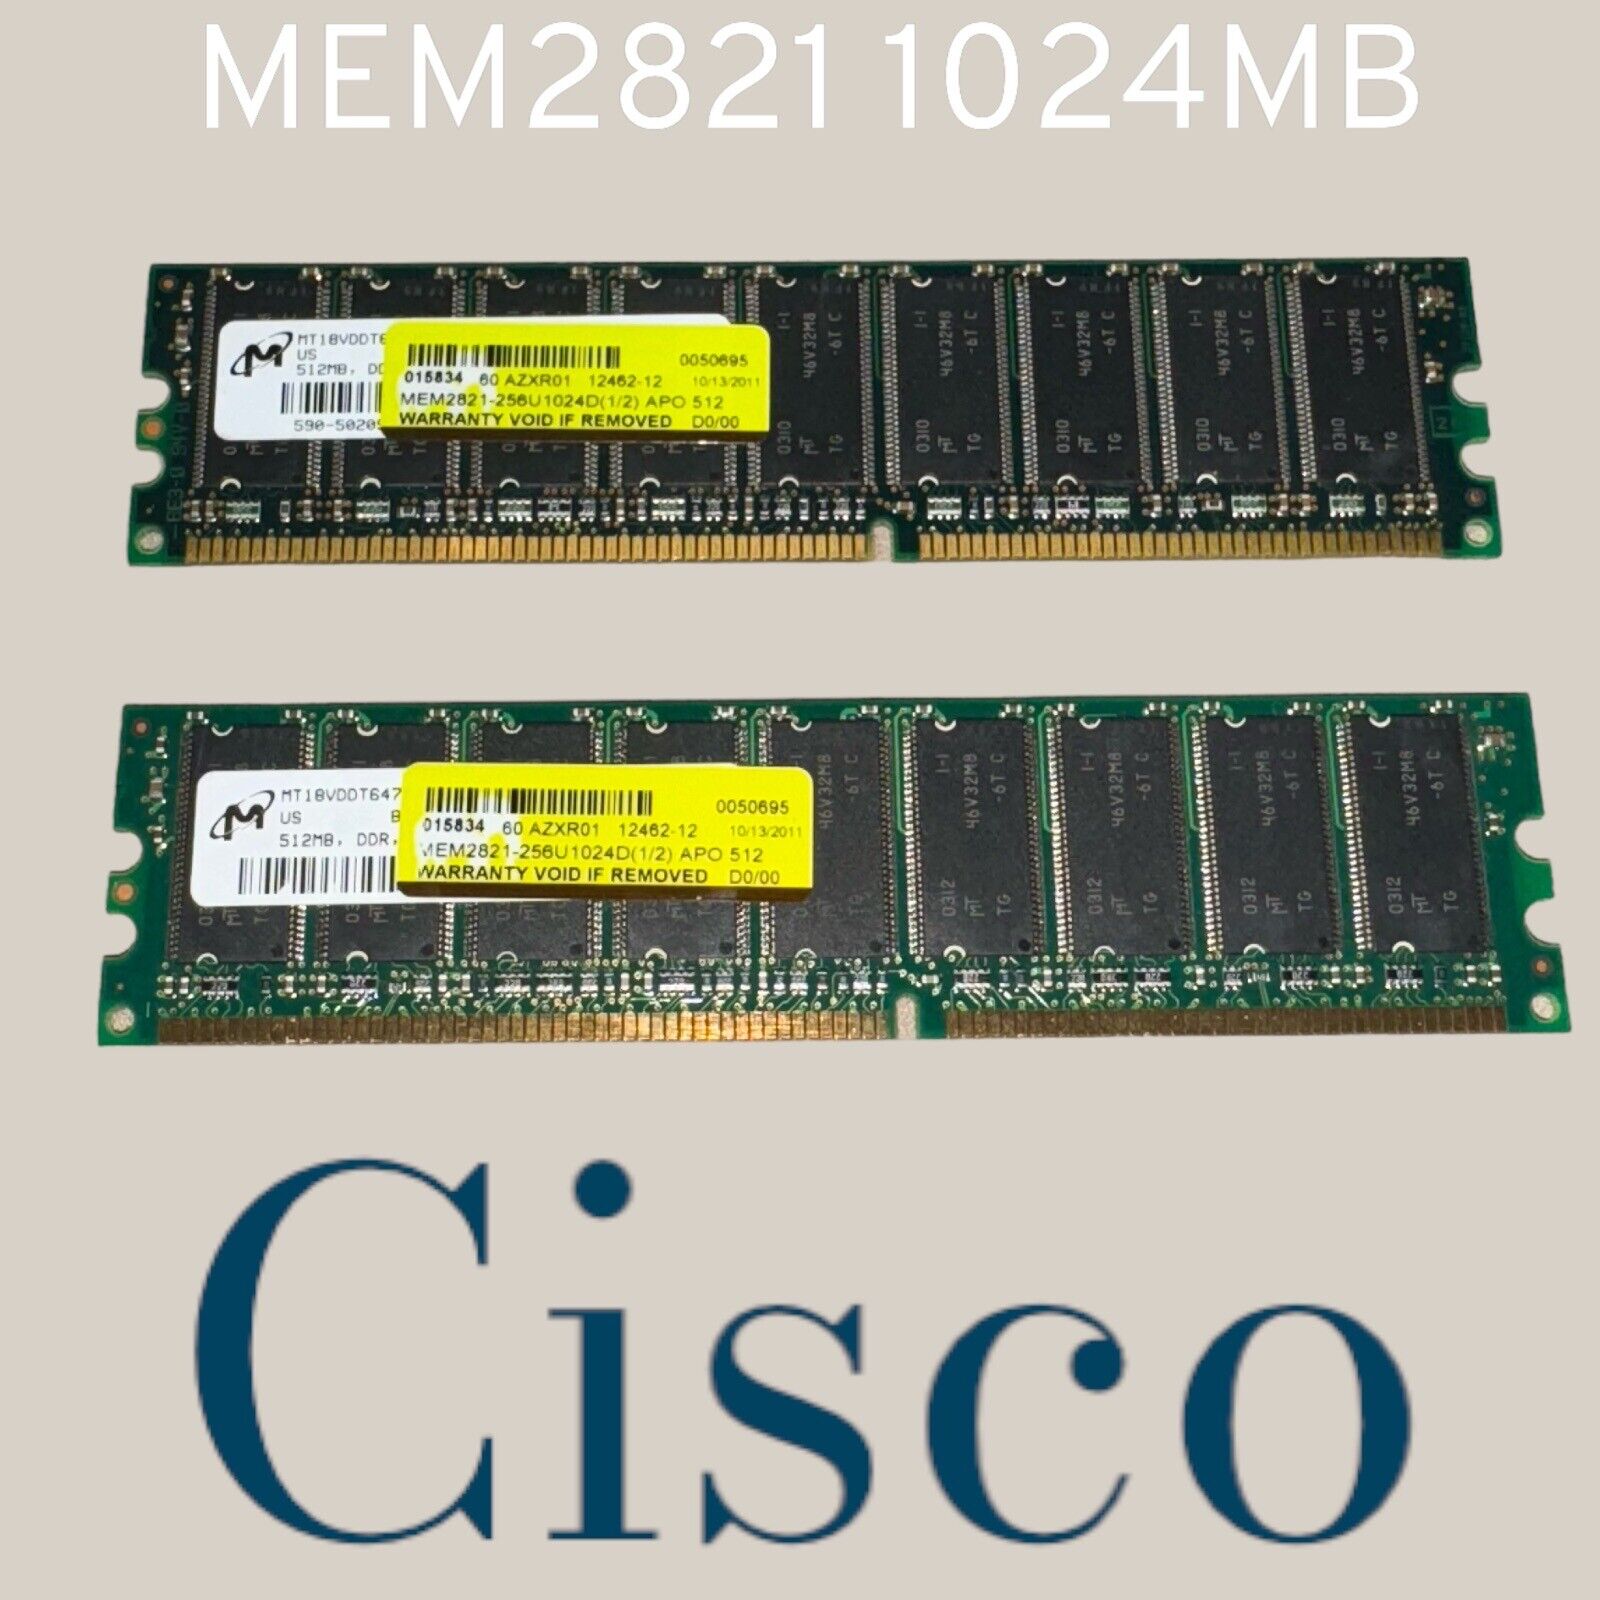 Cisco Approved DRAM Memory MEM2821-512D 512MB for Cisco 2800 Series 2821 -Pack 2